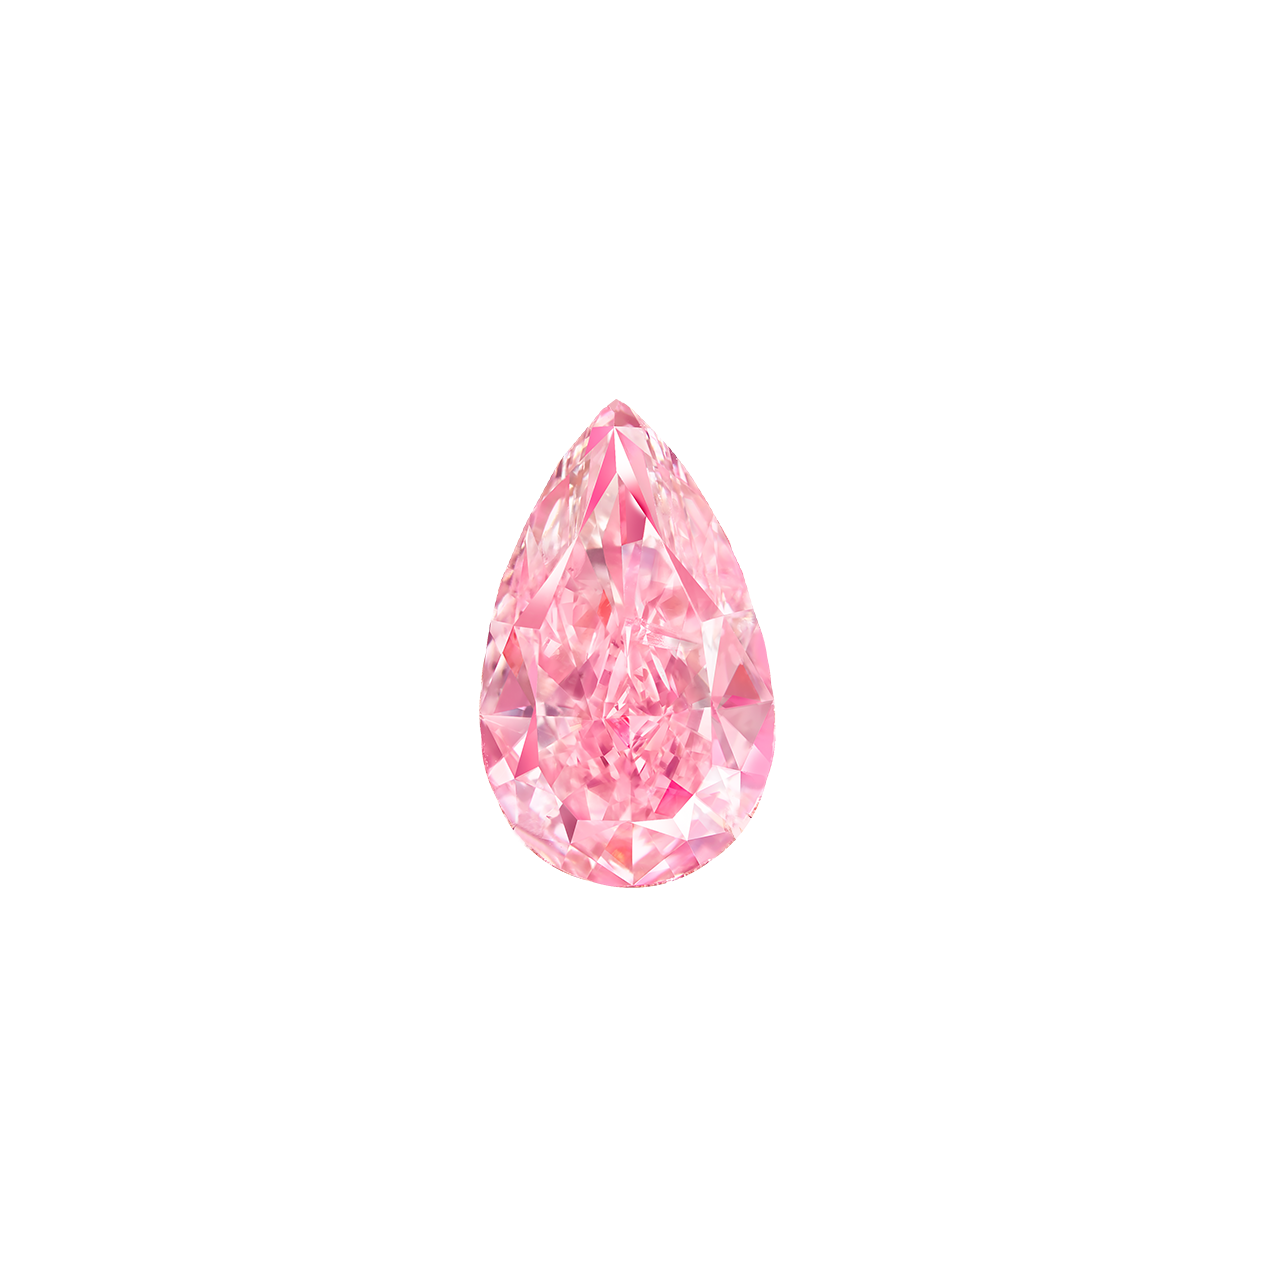 GIA 1.51 克拉 粉彩鑽裸石
UNMOUNTED FANCY PINK DIAMOND